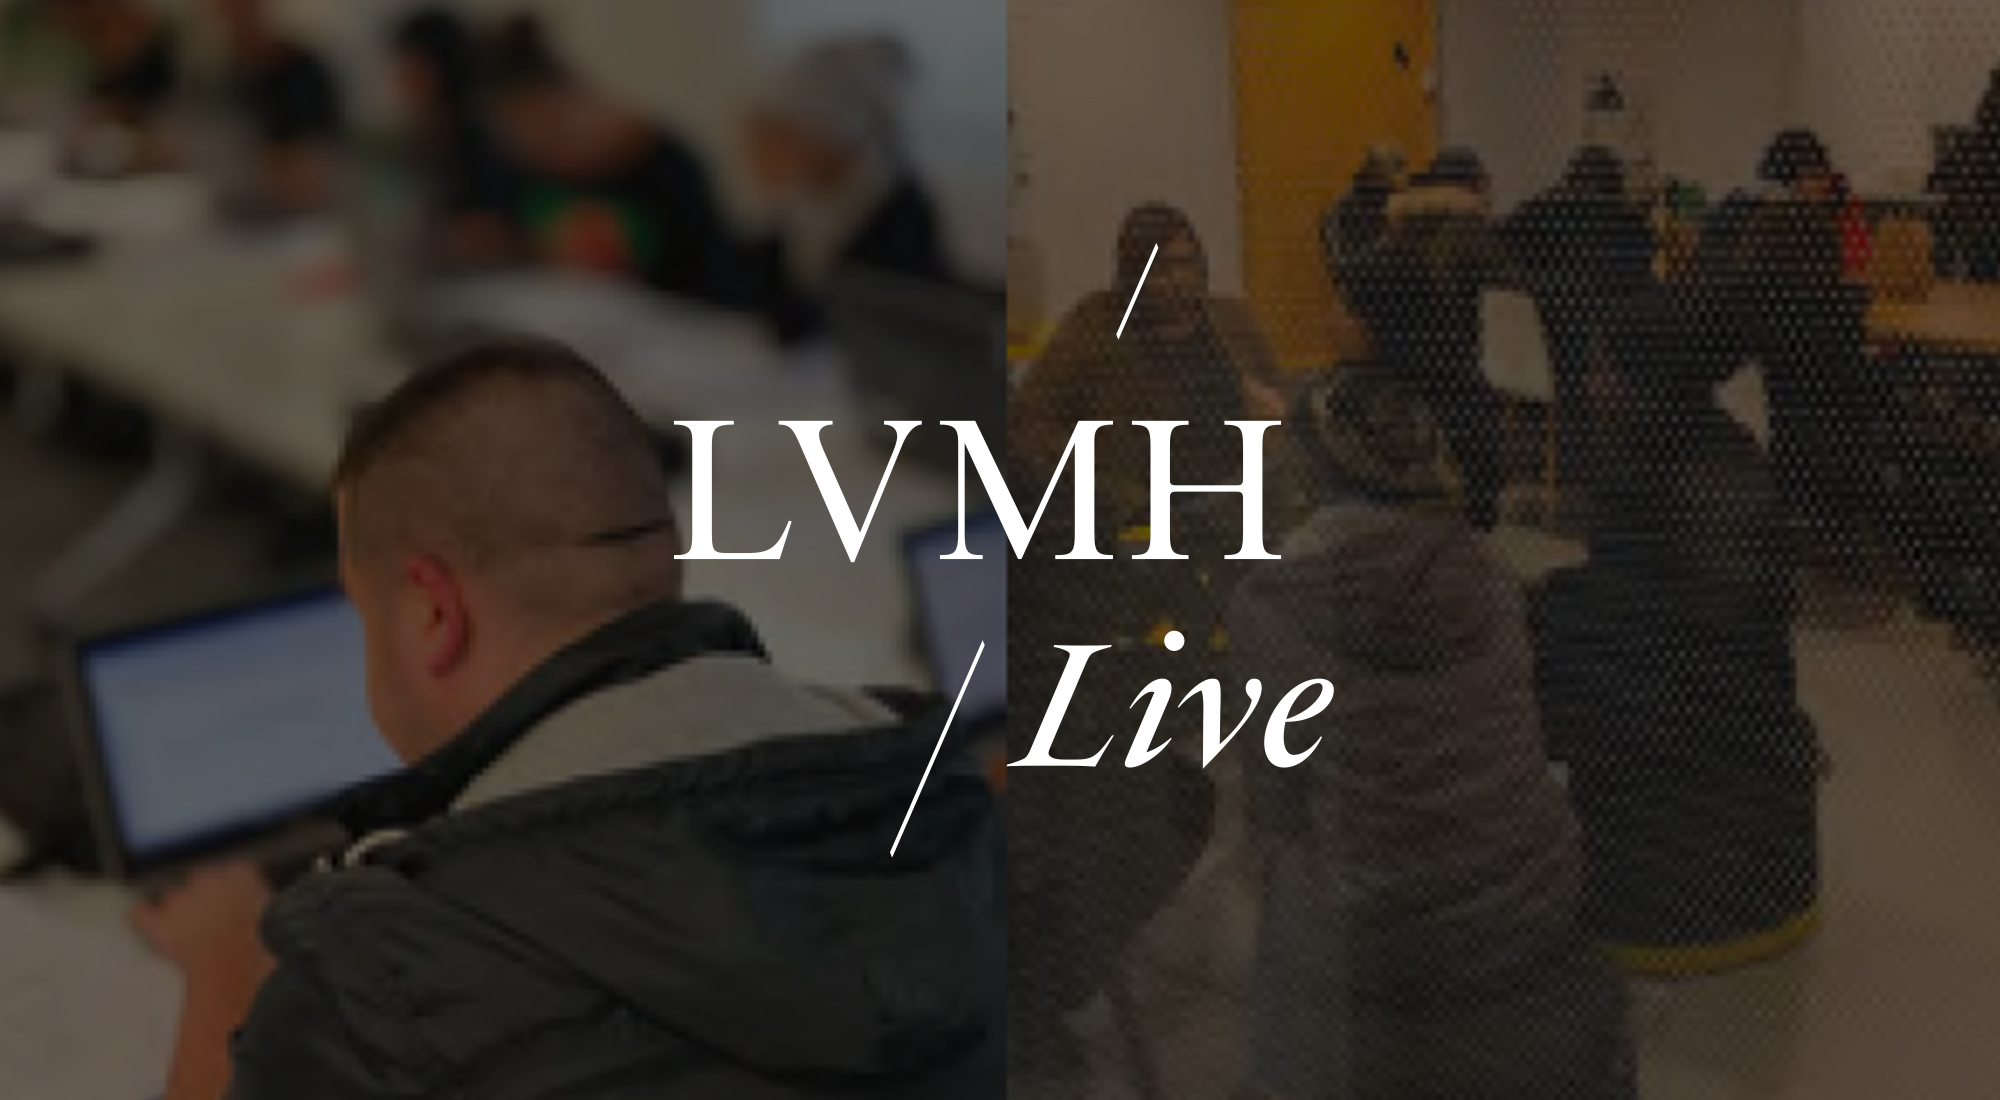 LVMH on LinkedIn: Discover our Social & Environmental